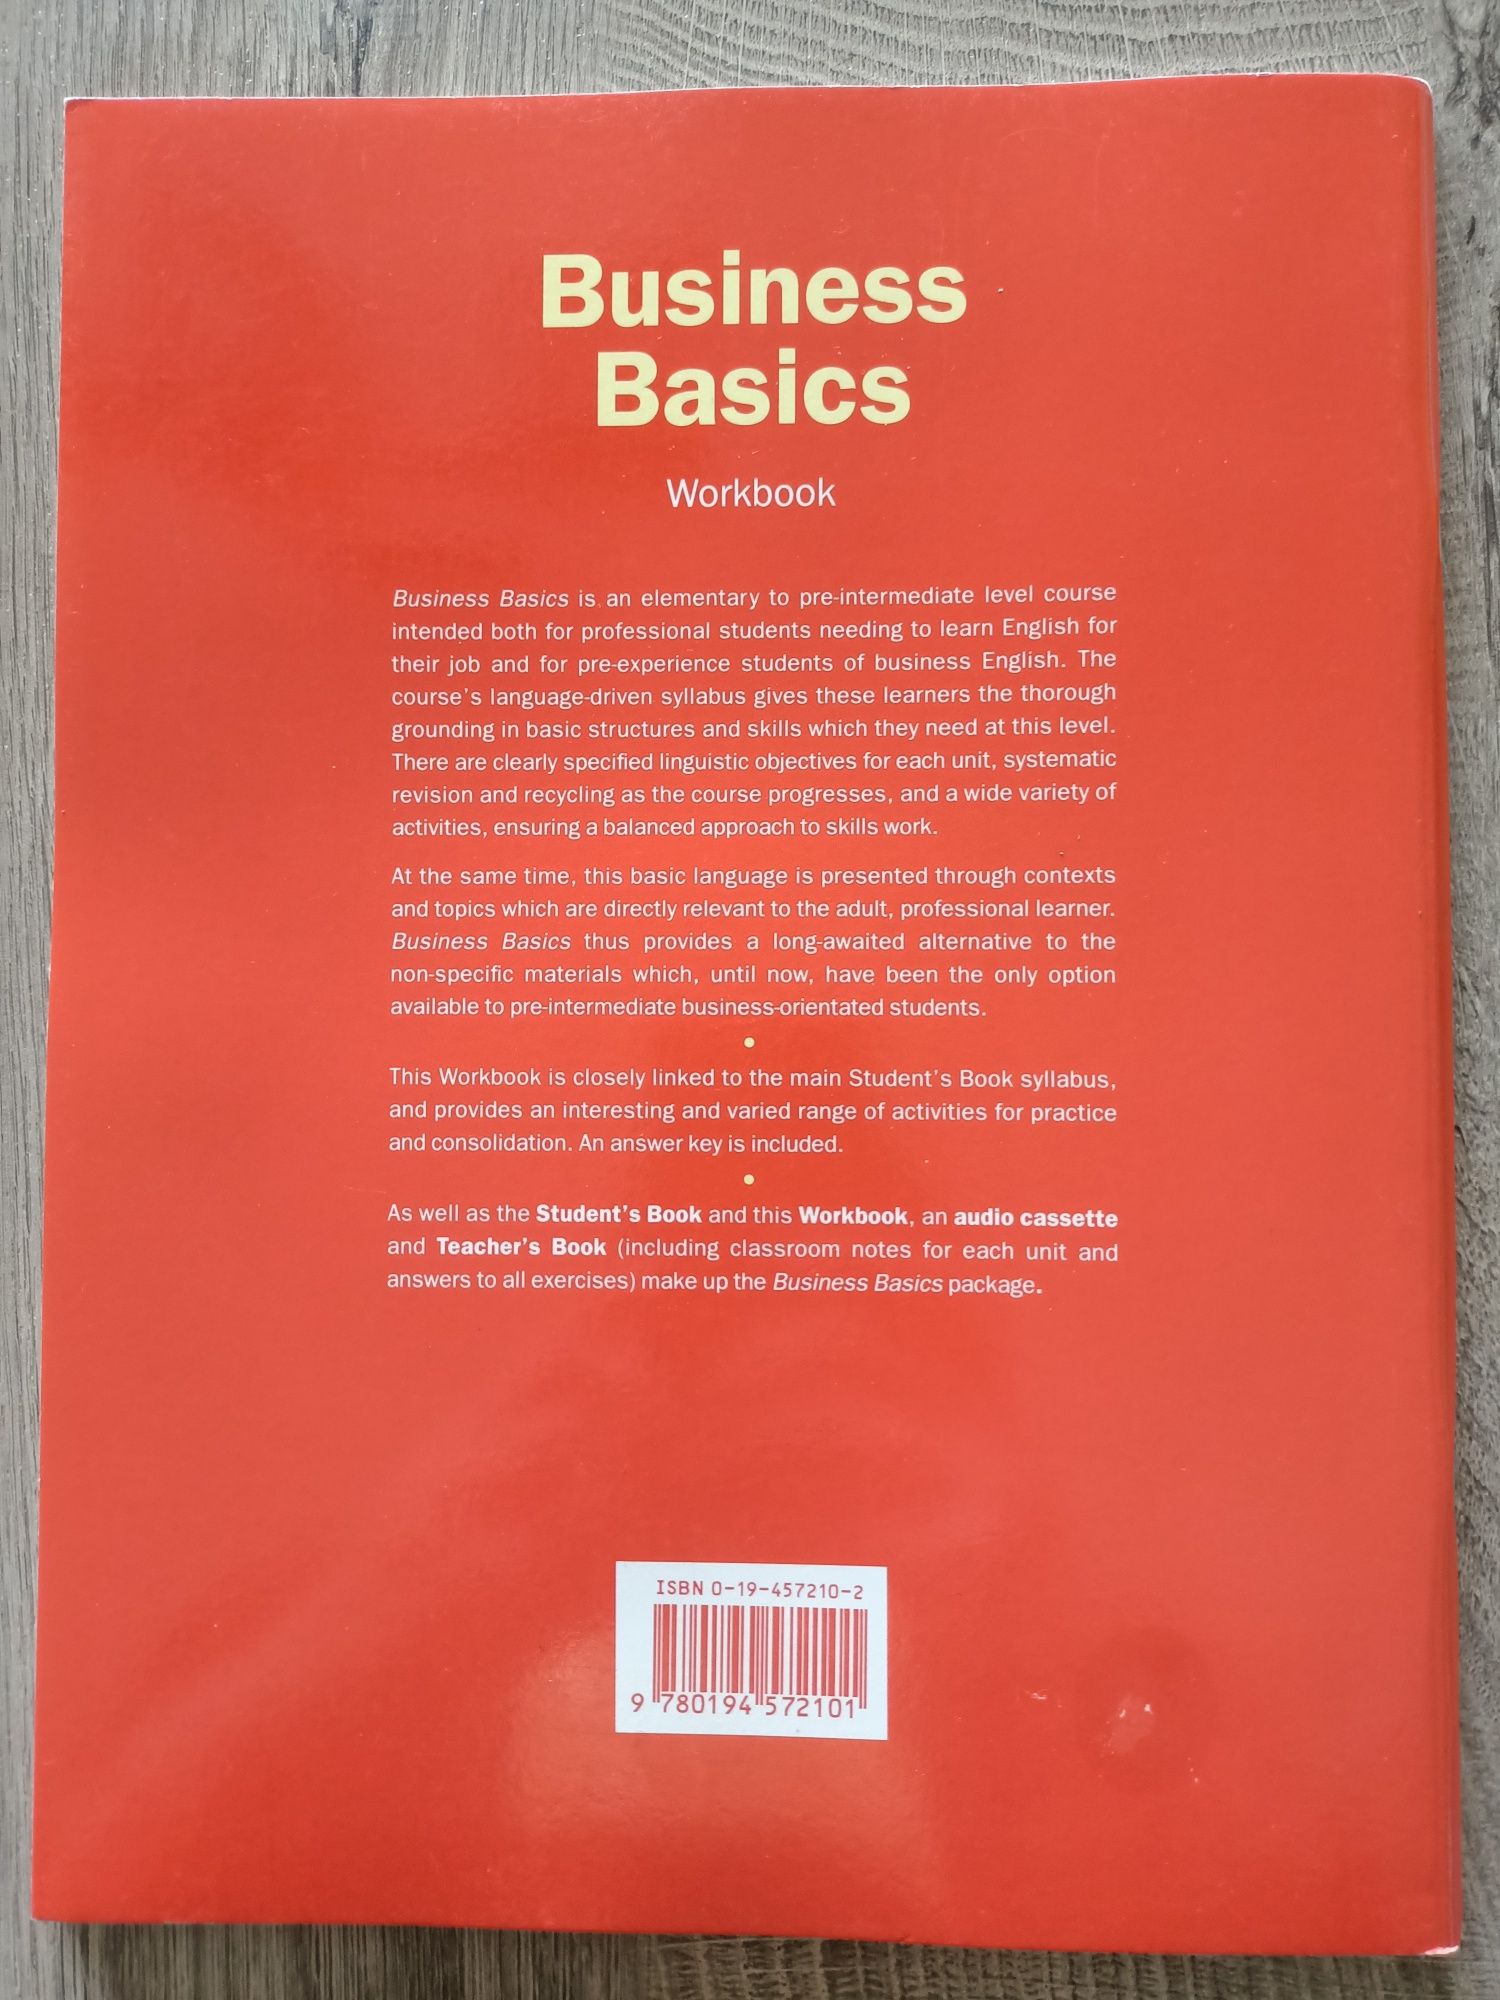 Business basics workbook